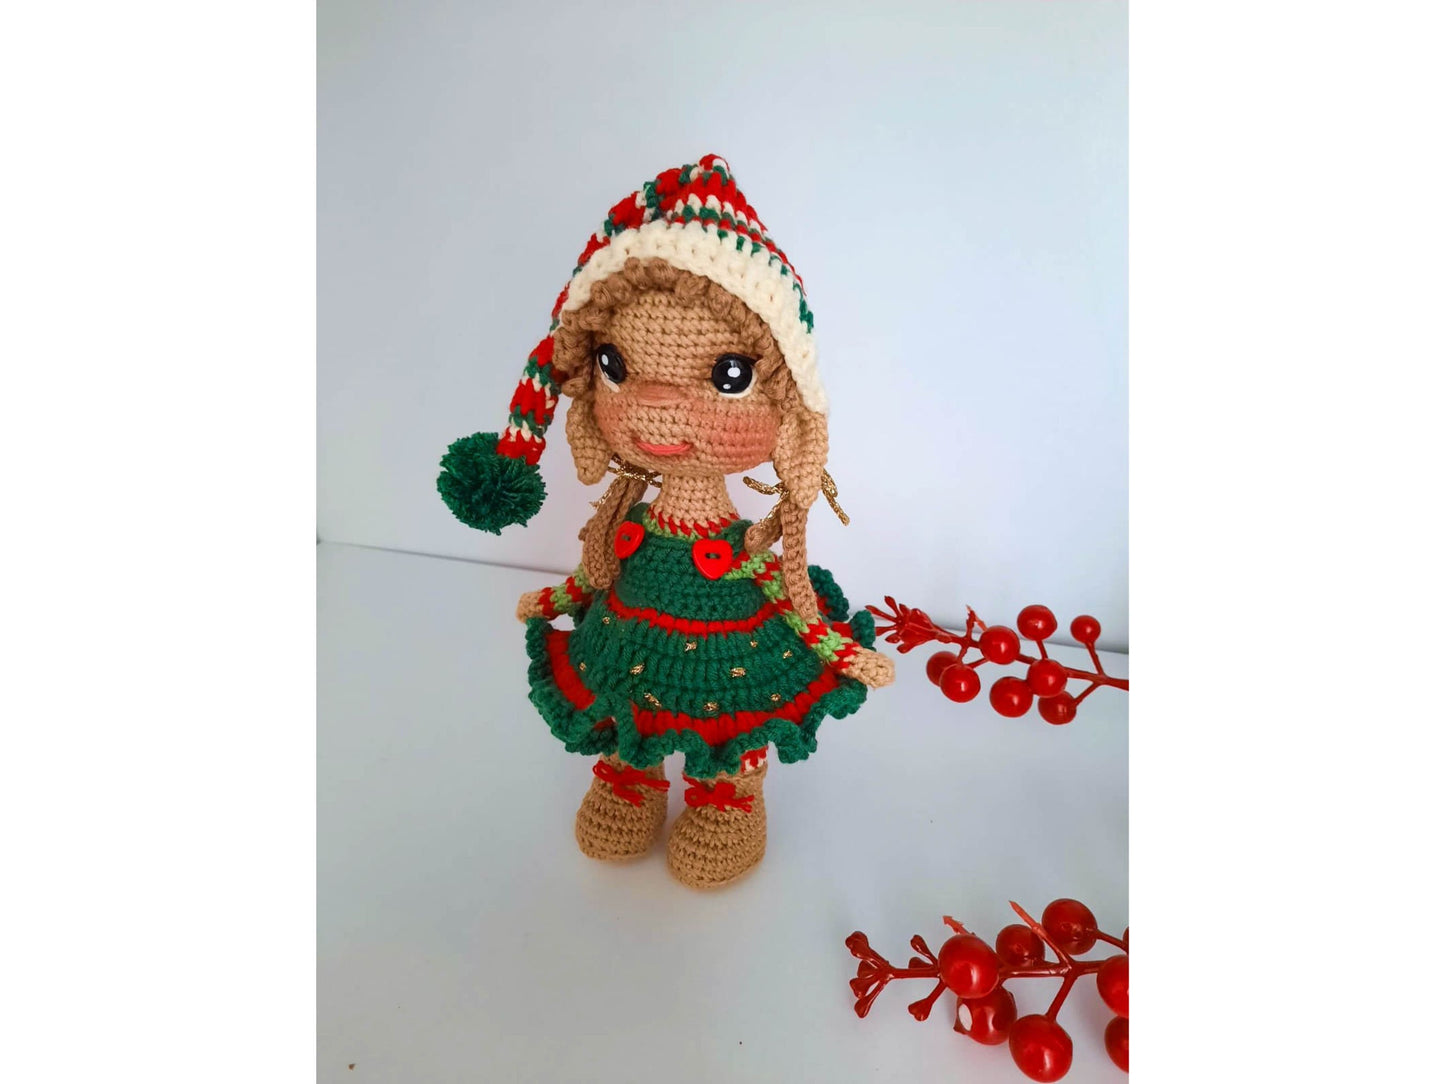 Handmade Crochet Elf Girl and Boy Plushies, Crochet Elf Boy and Girl Dolls